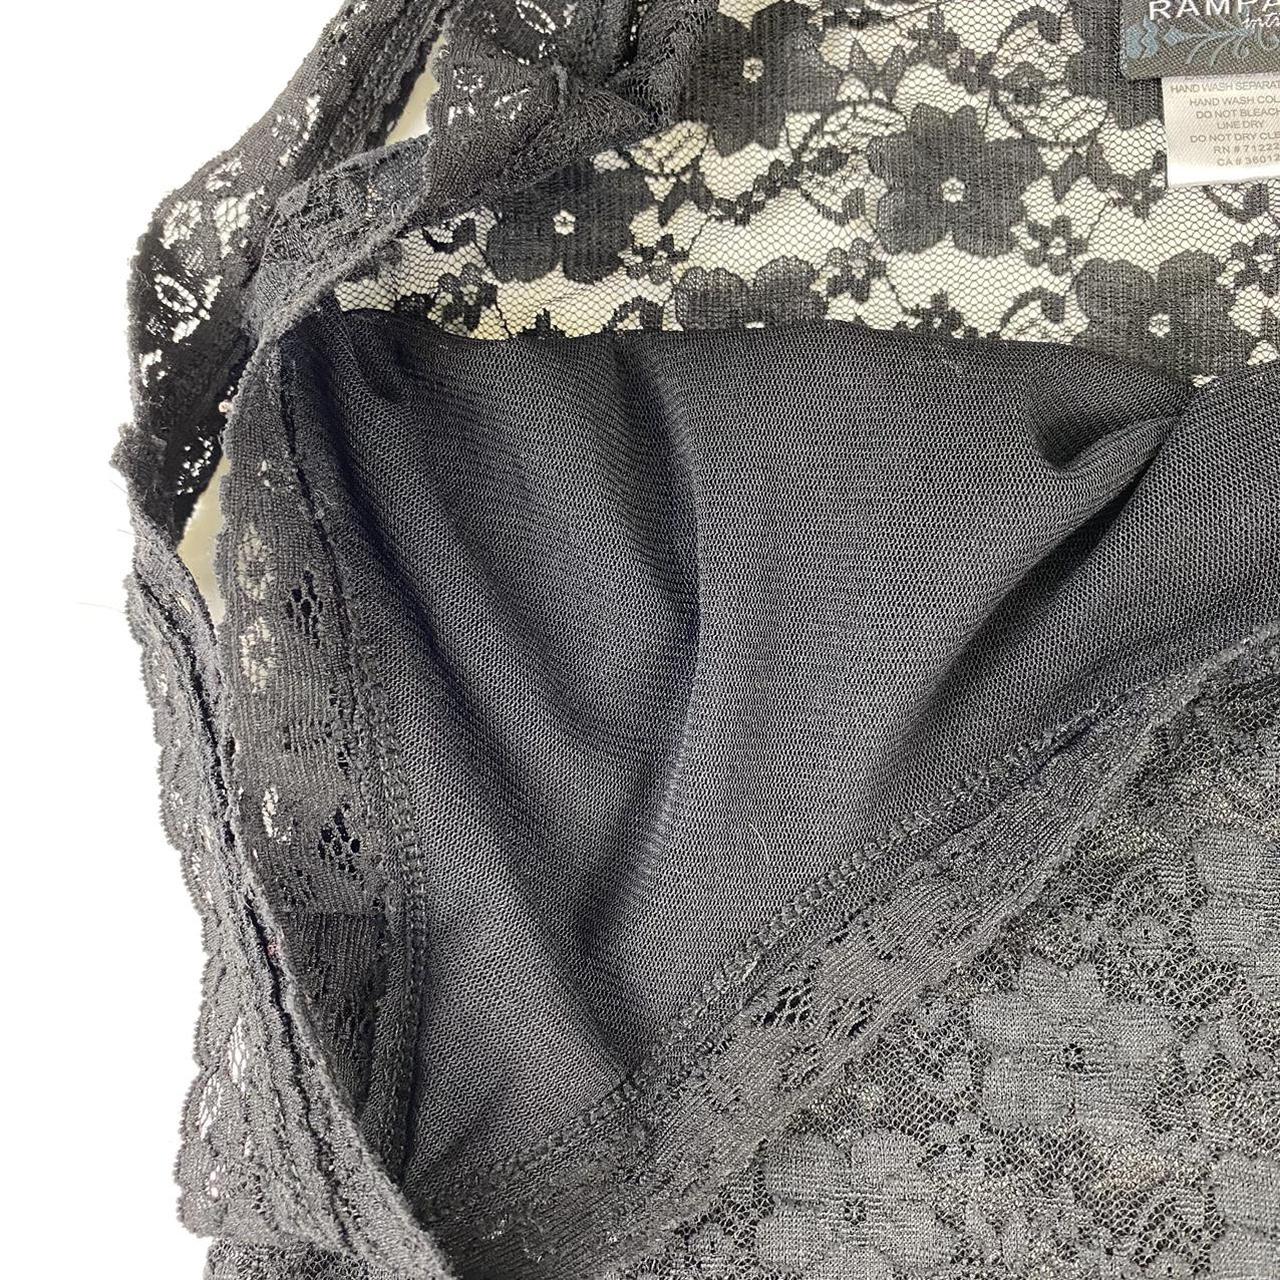 Rampage Women's Black Vests-tanks-camis (4)